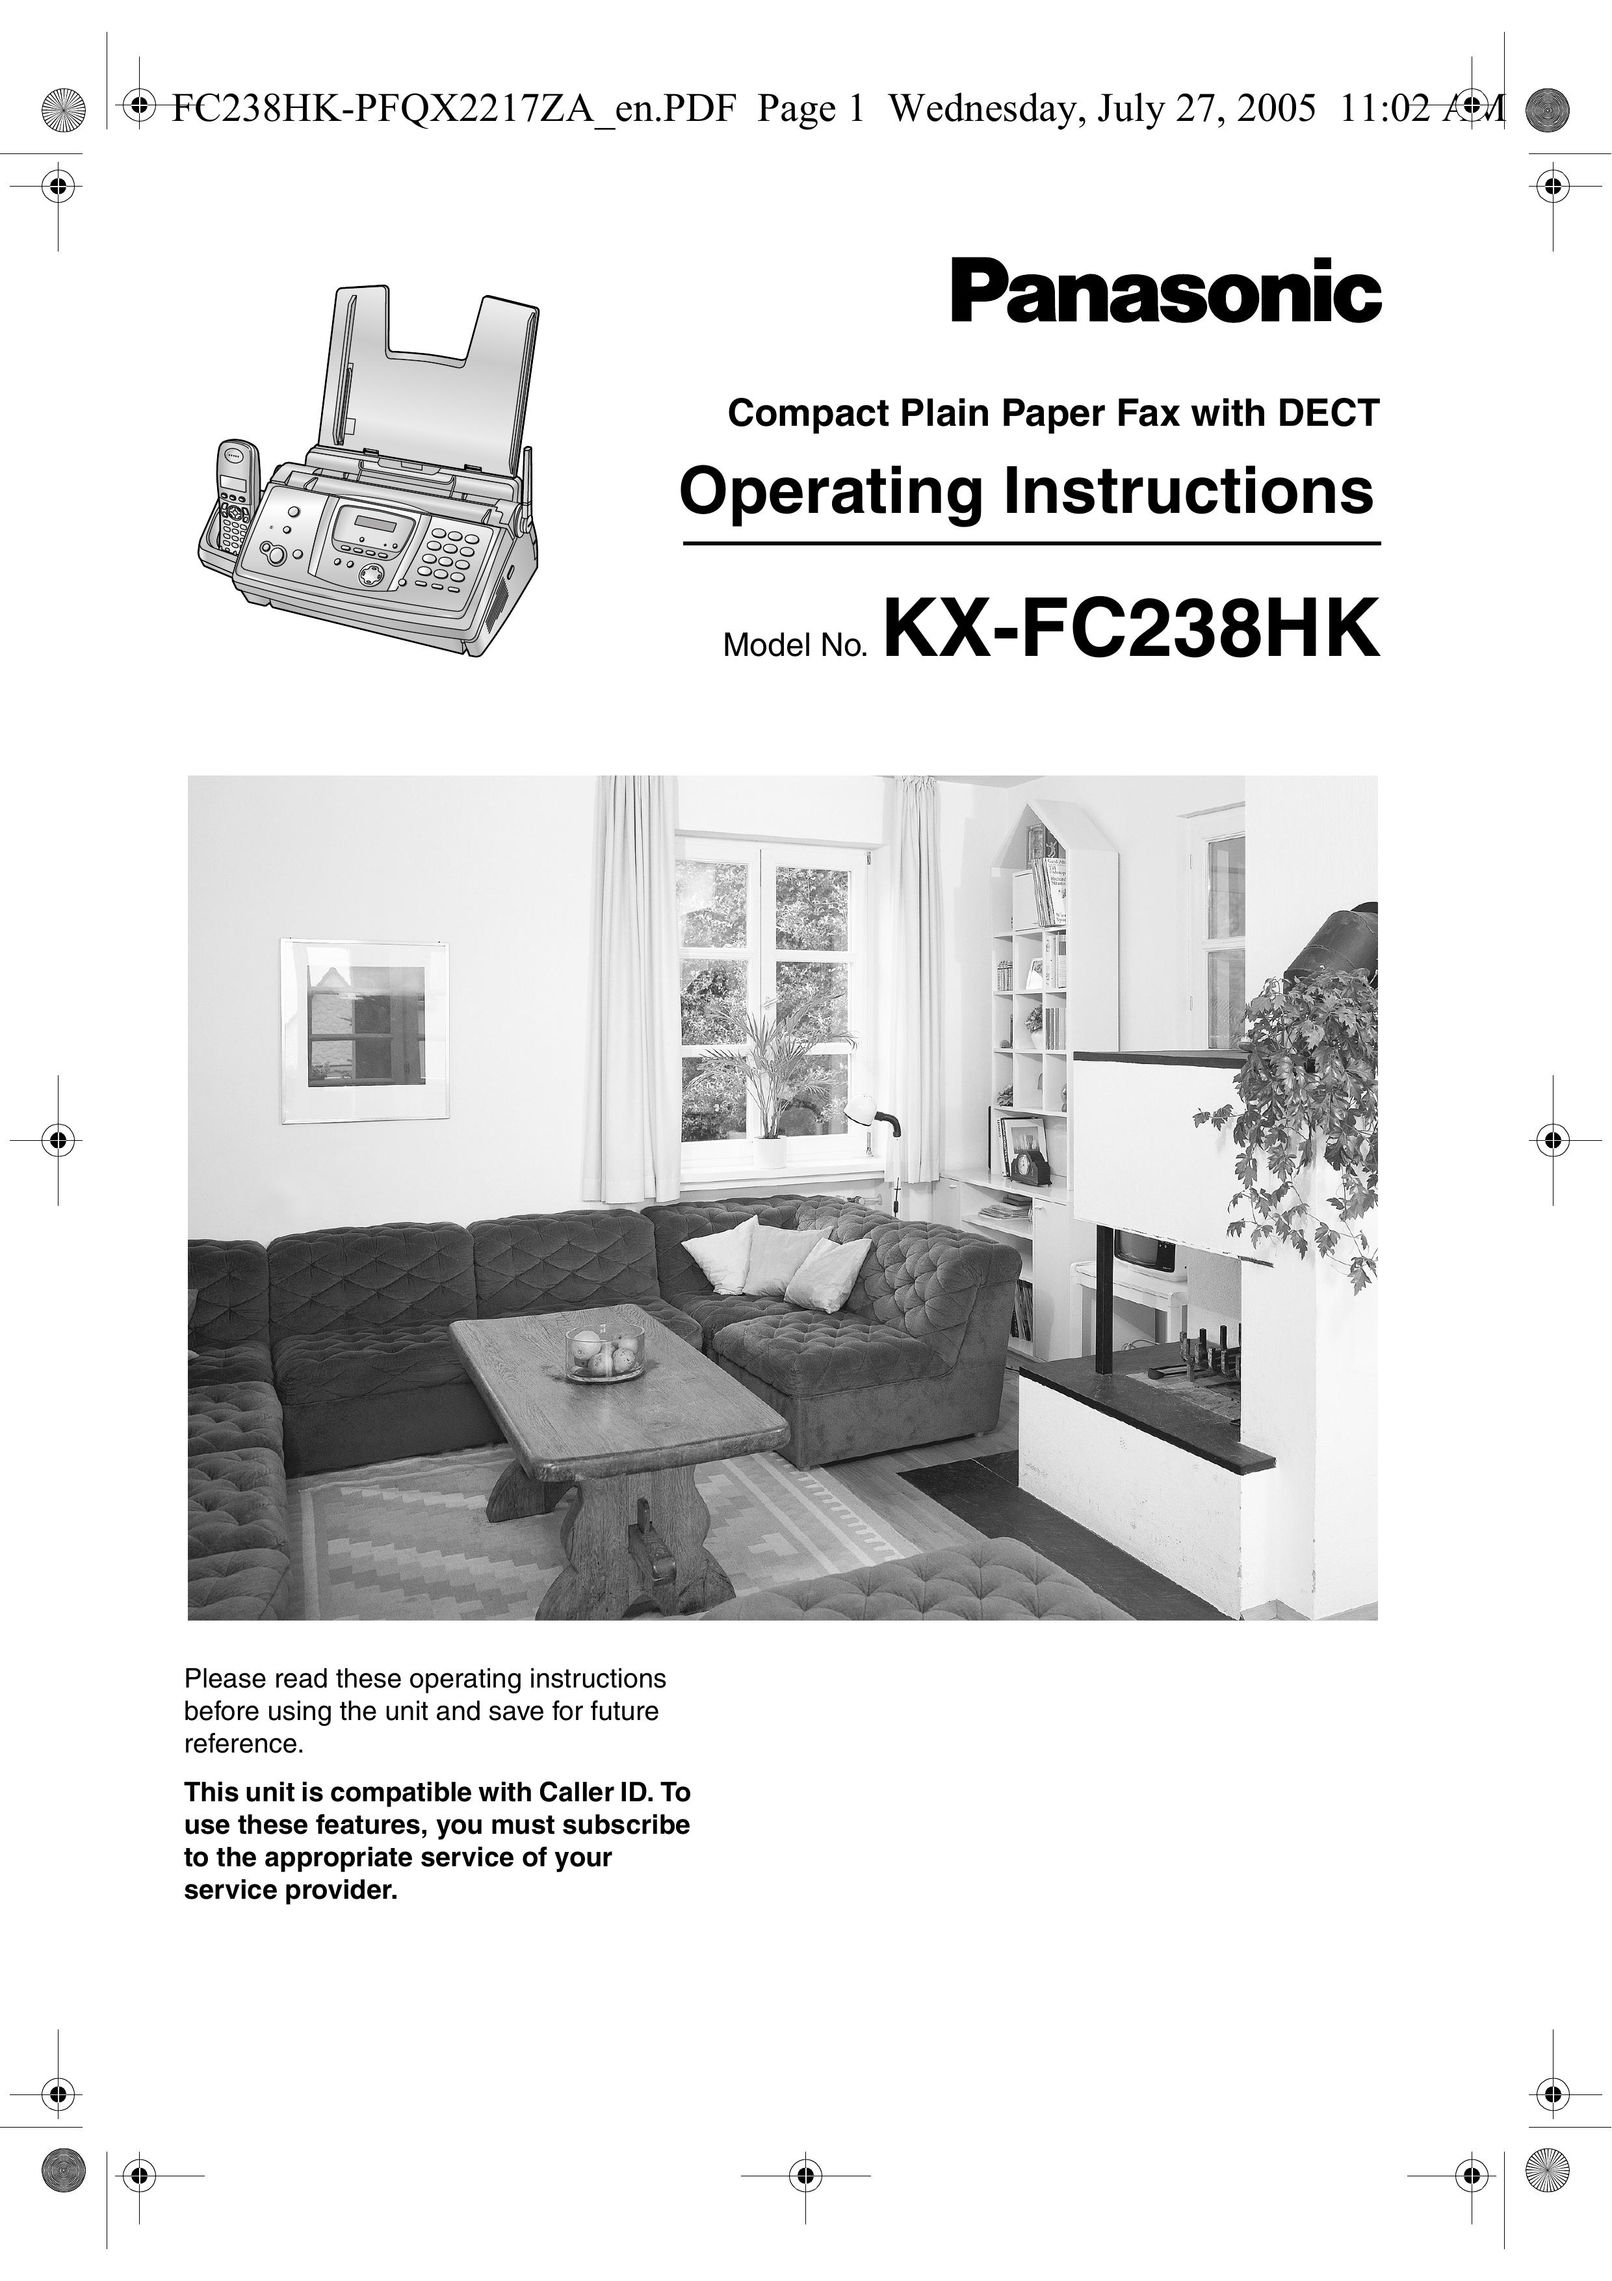 Panasonic KX-FC238HK Fax Machine User Manual